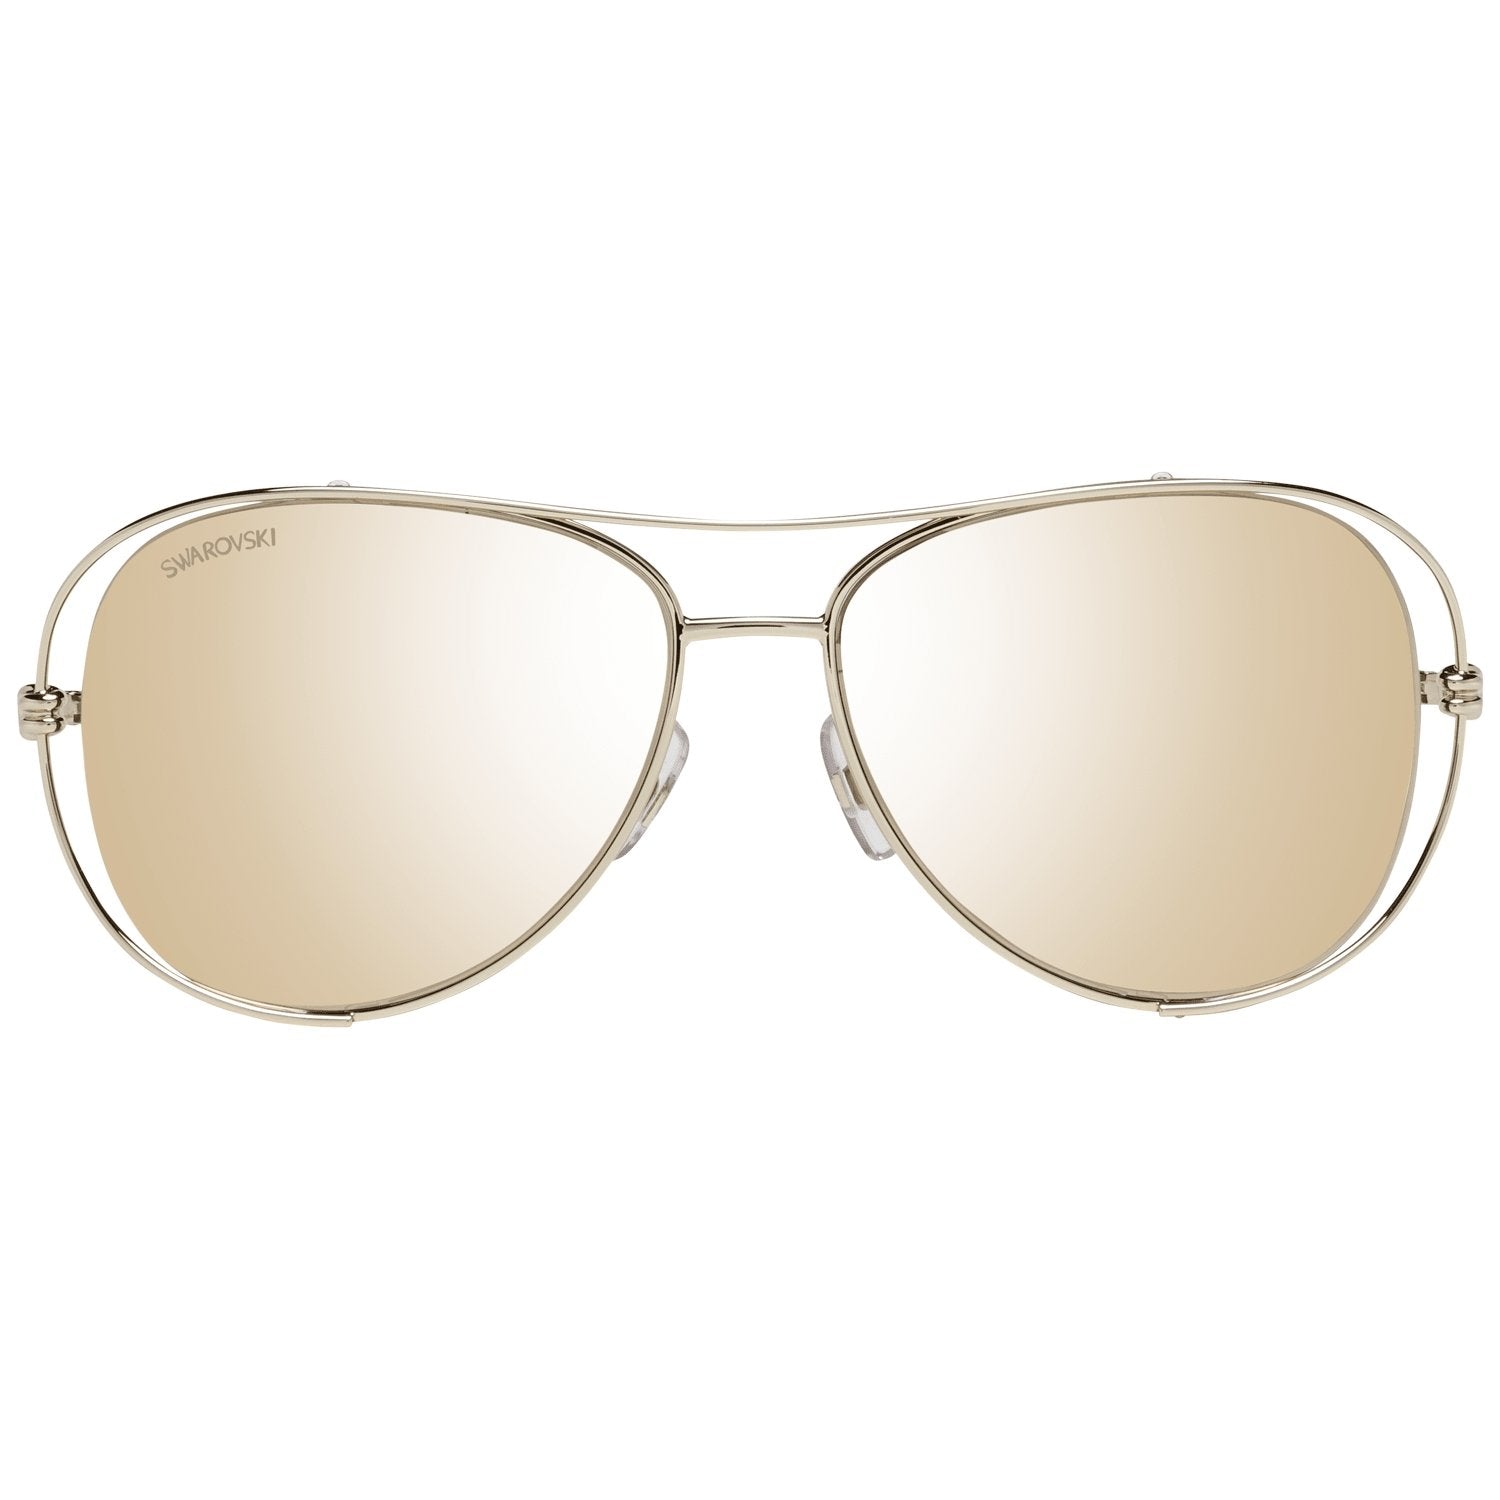 Swarovski Gold Women Sunglasses - Fizigo